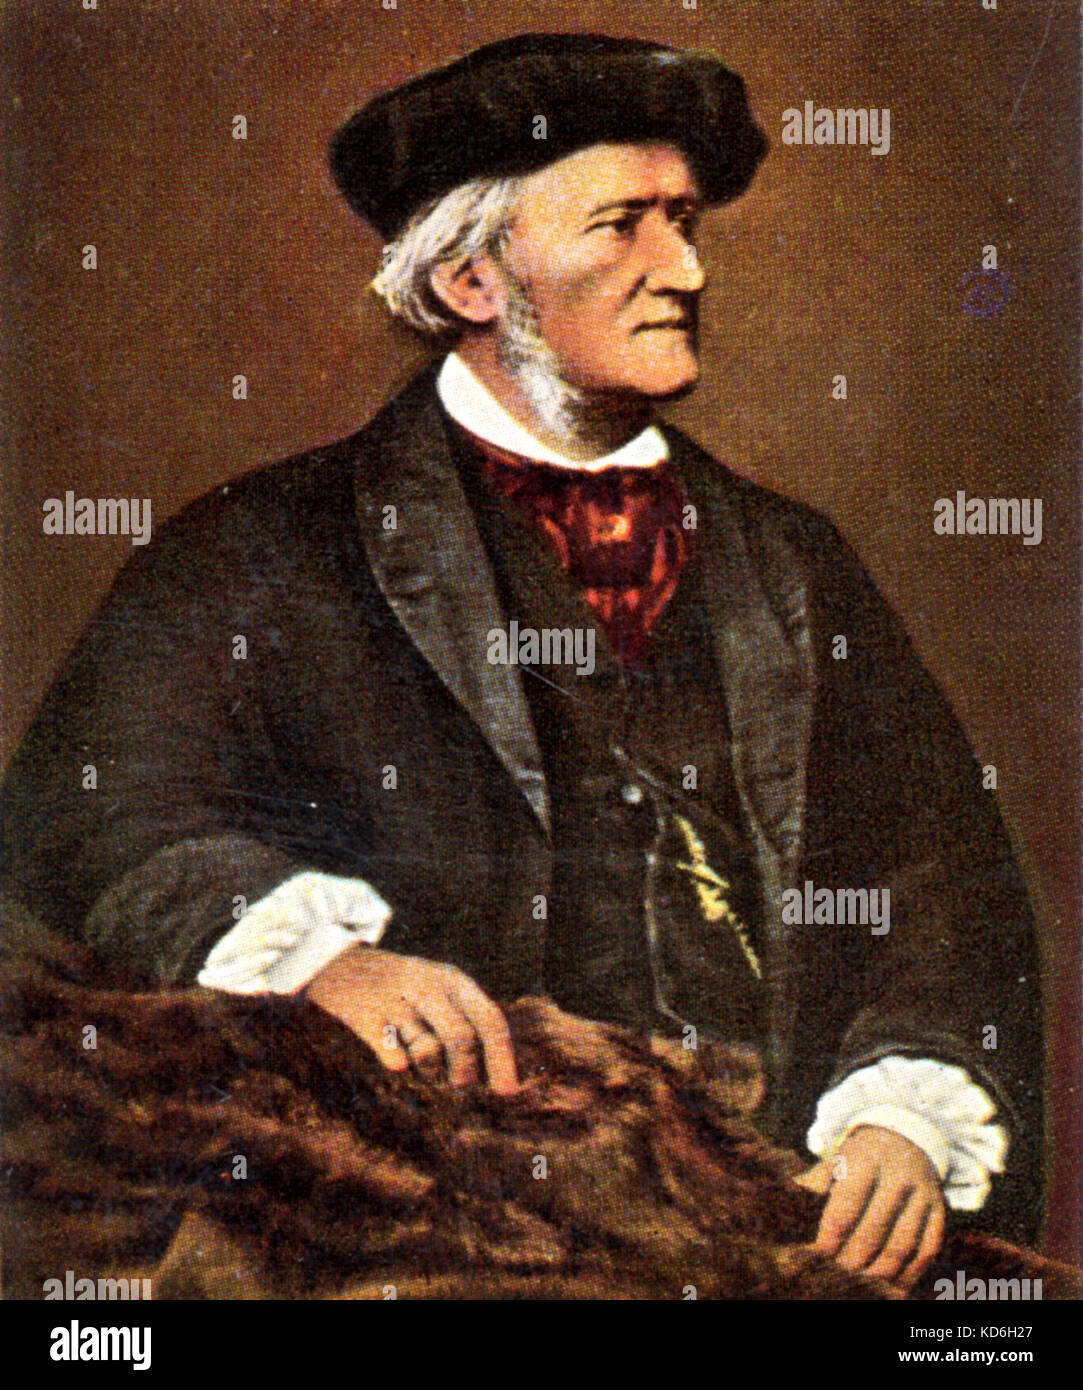 Richard Wagner portrait on Eckstein card. German composer & author (1813-1883). Stock Photo